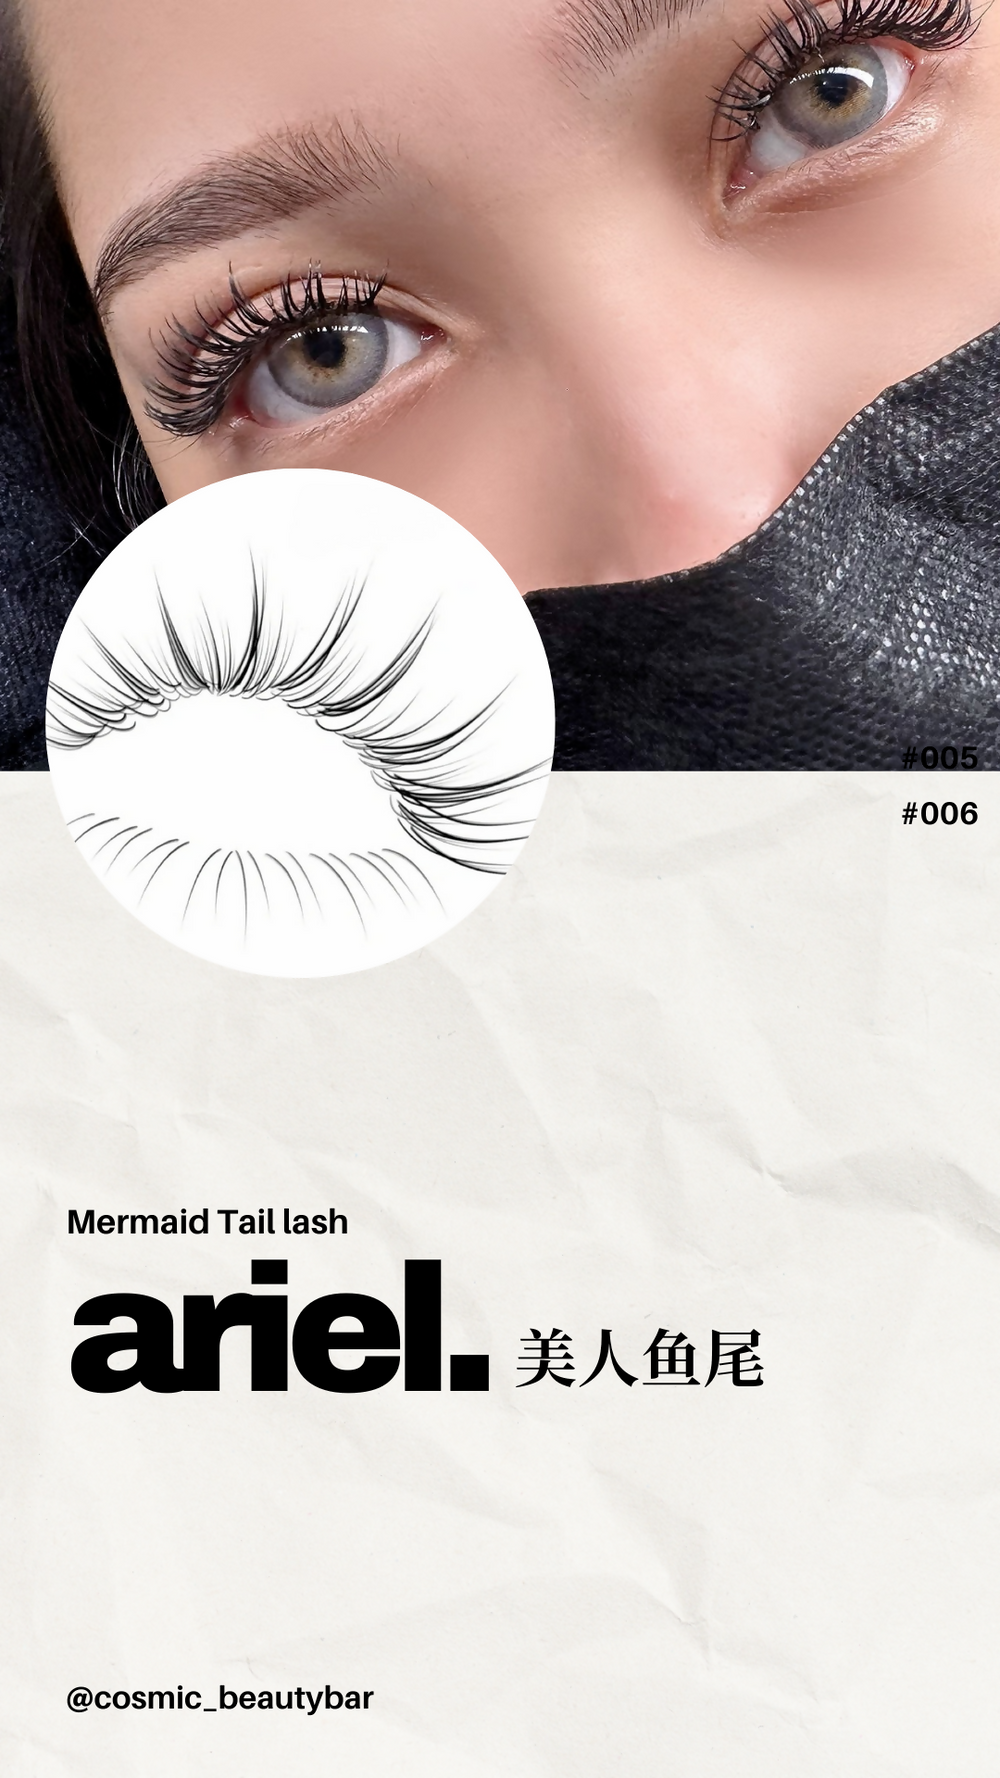 Ariel (Mermaid Tail Lash)